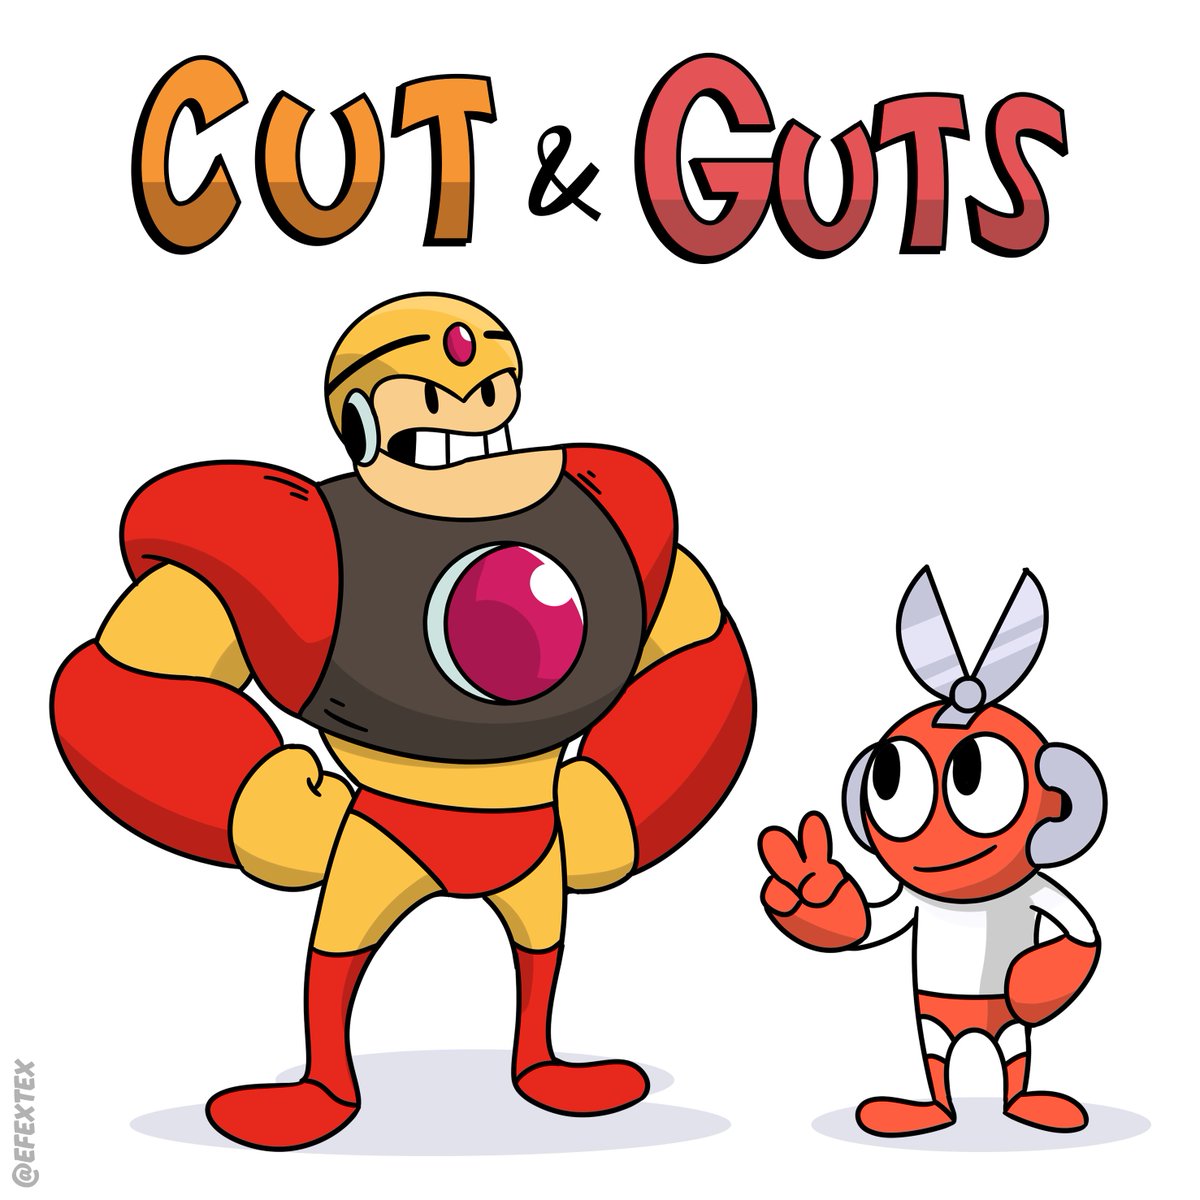 Cut & Guts - Nerd and Jock (comic) Parody 
-
#MegaMan #Rockman #NerdandJock